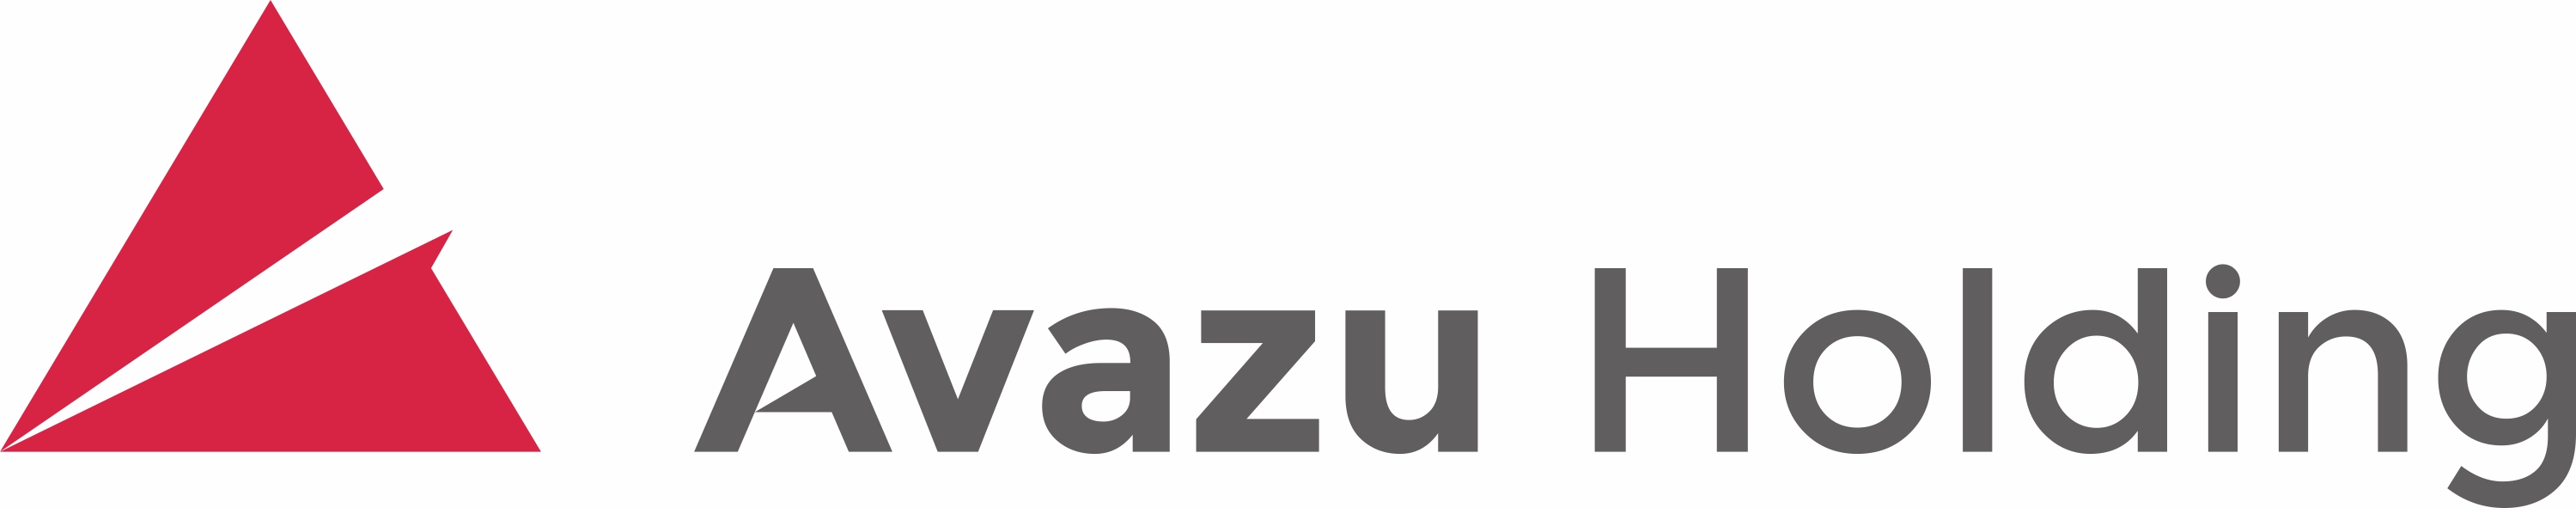 Avazu holding-横版